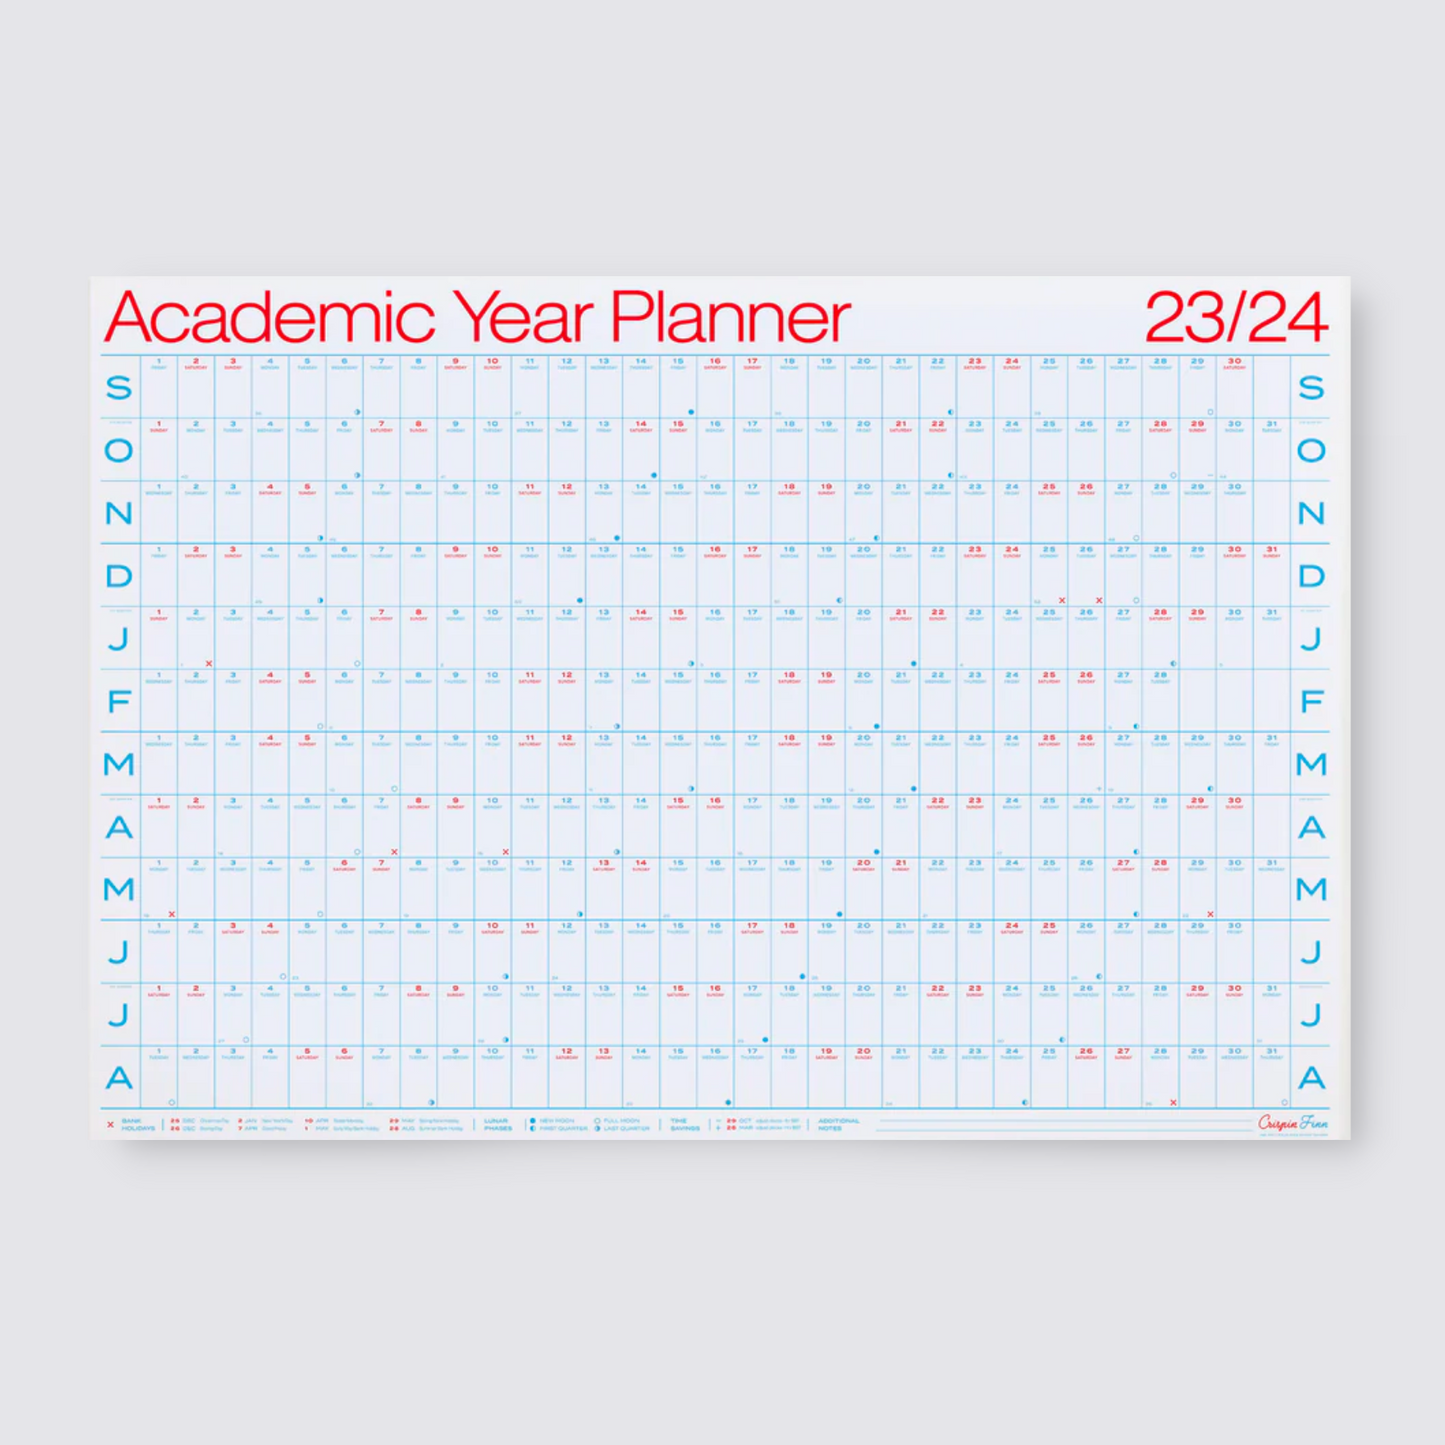 2023 - 2024 Academic Year Planner